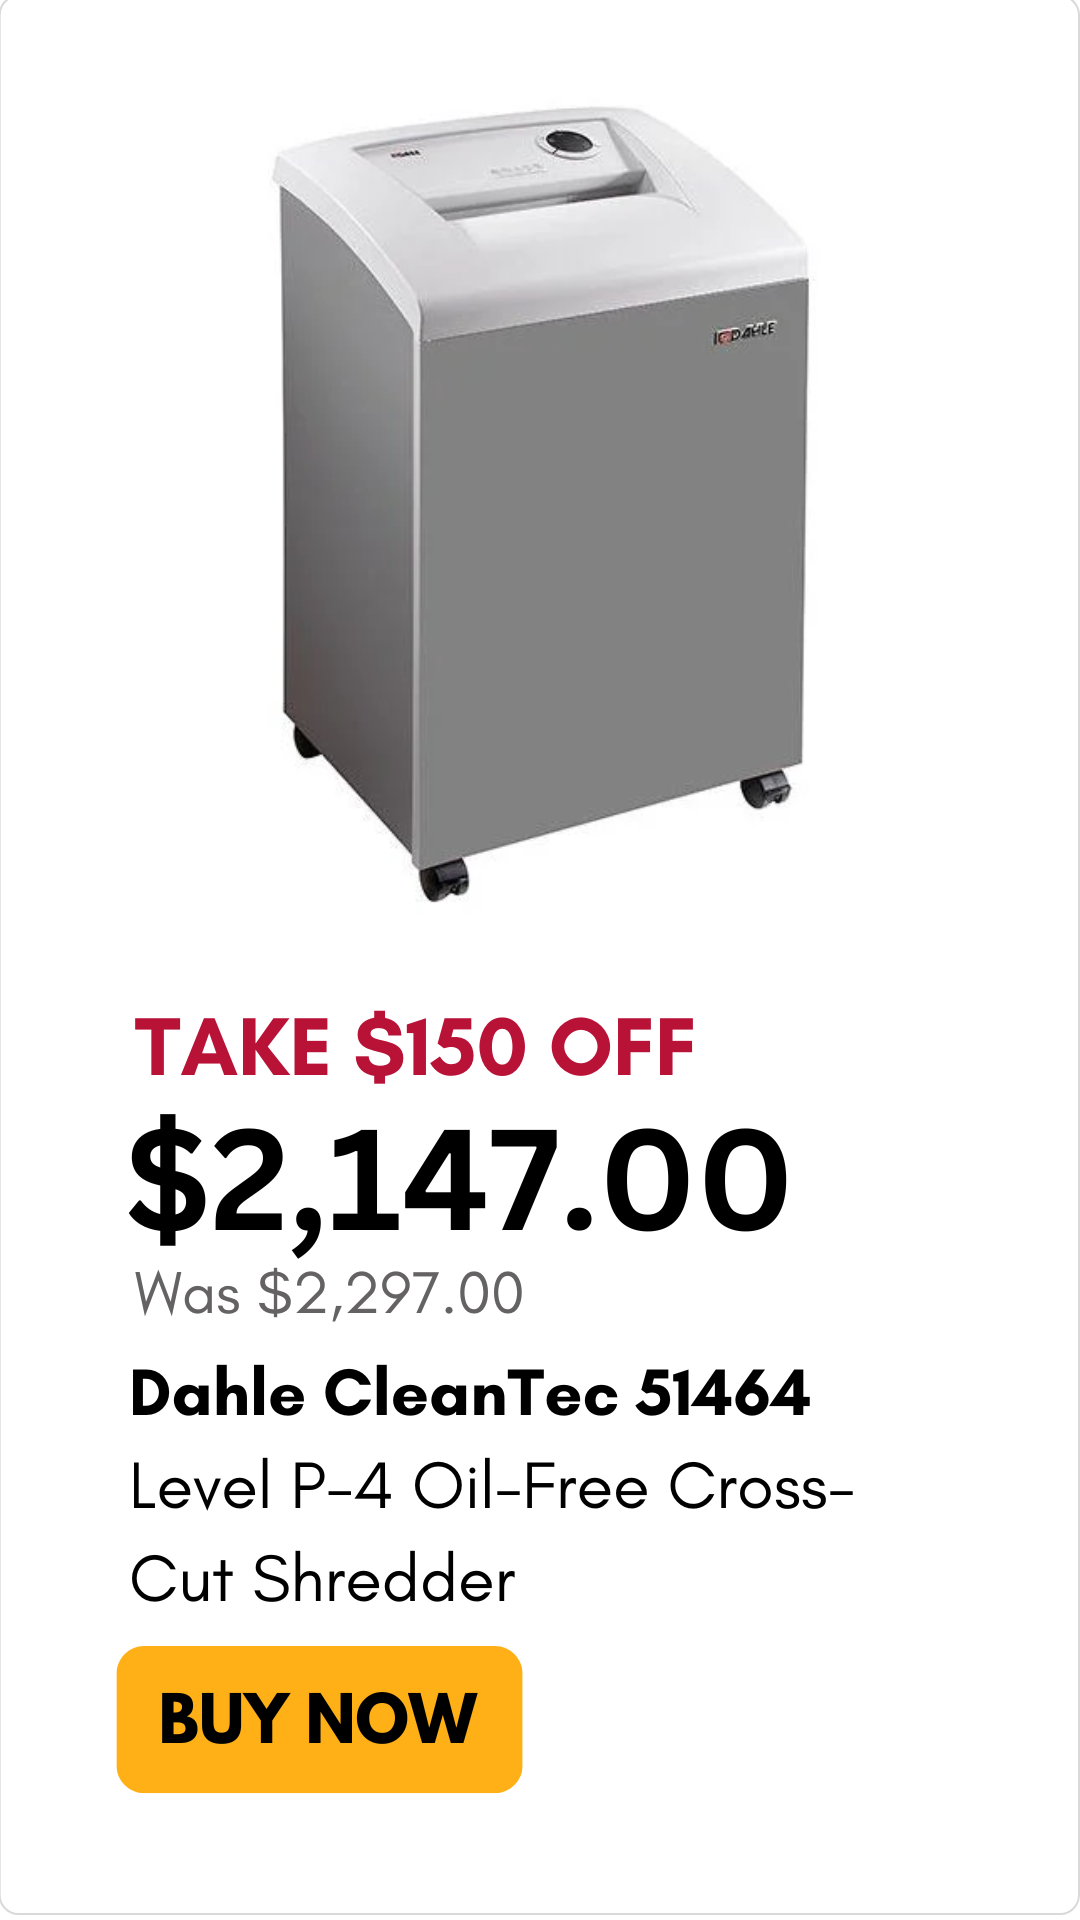 Dahle CleanTec 51464 Level P-4 Oil-Free Cross-Cut Shredder on sale for $150 on Mybinding.com